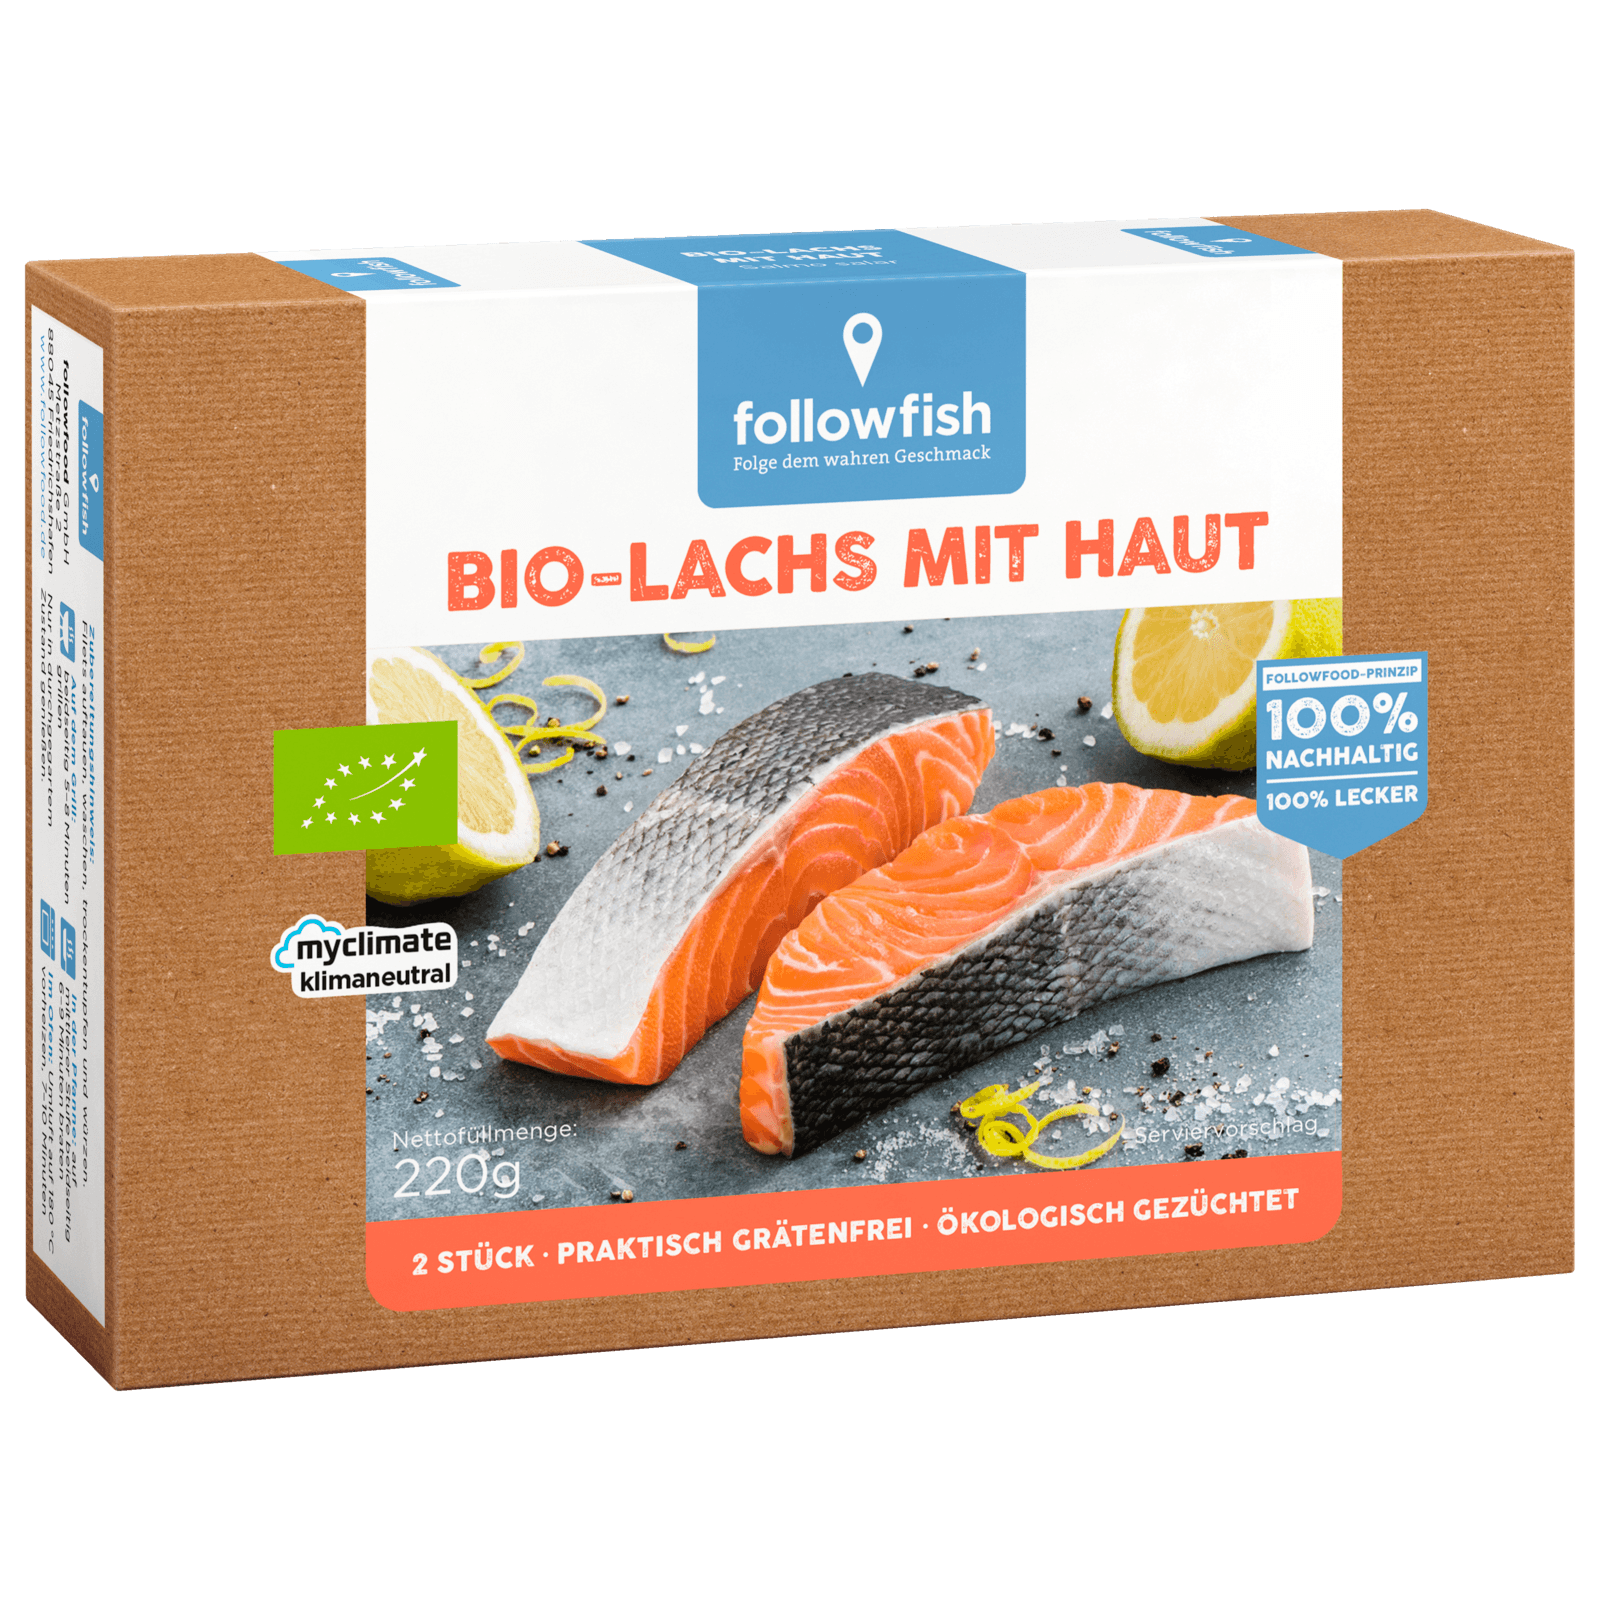 Followfish Bio Lachs Filets mit Haut 220g  für 9.49 EUR